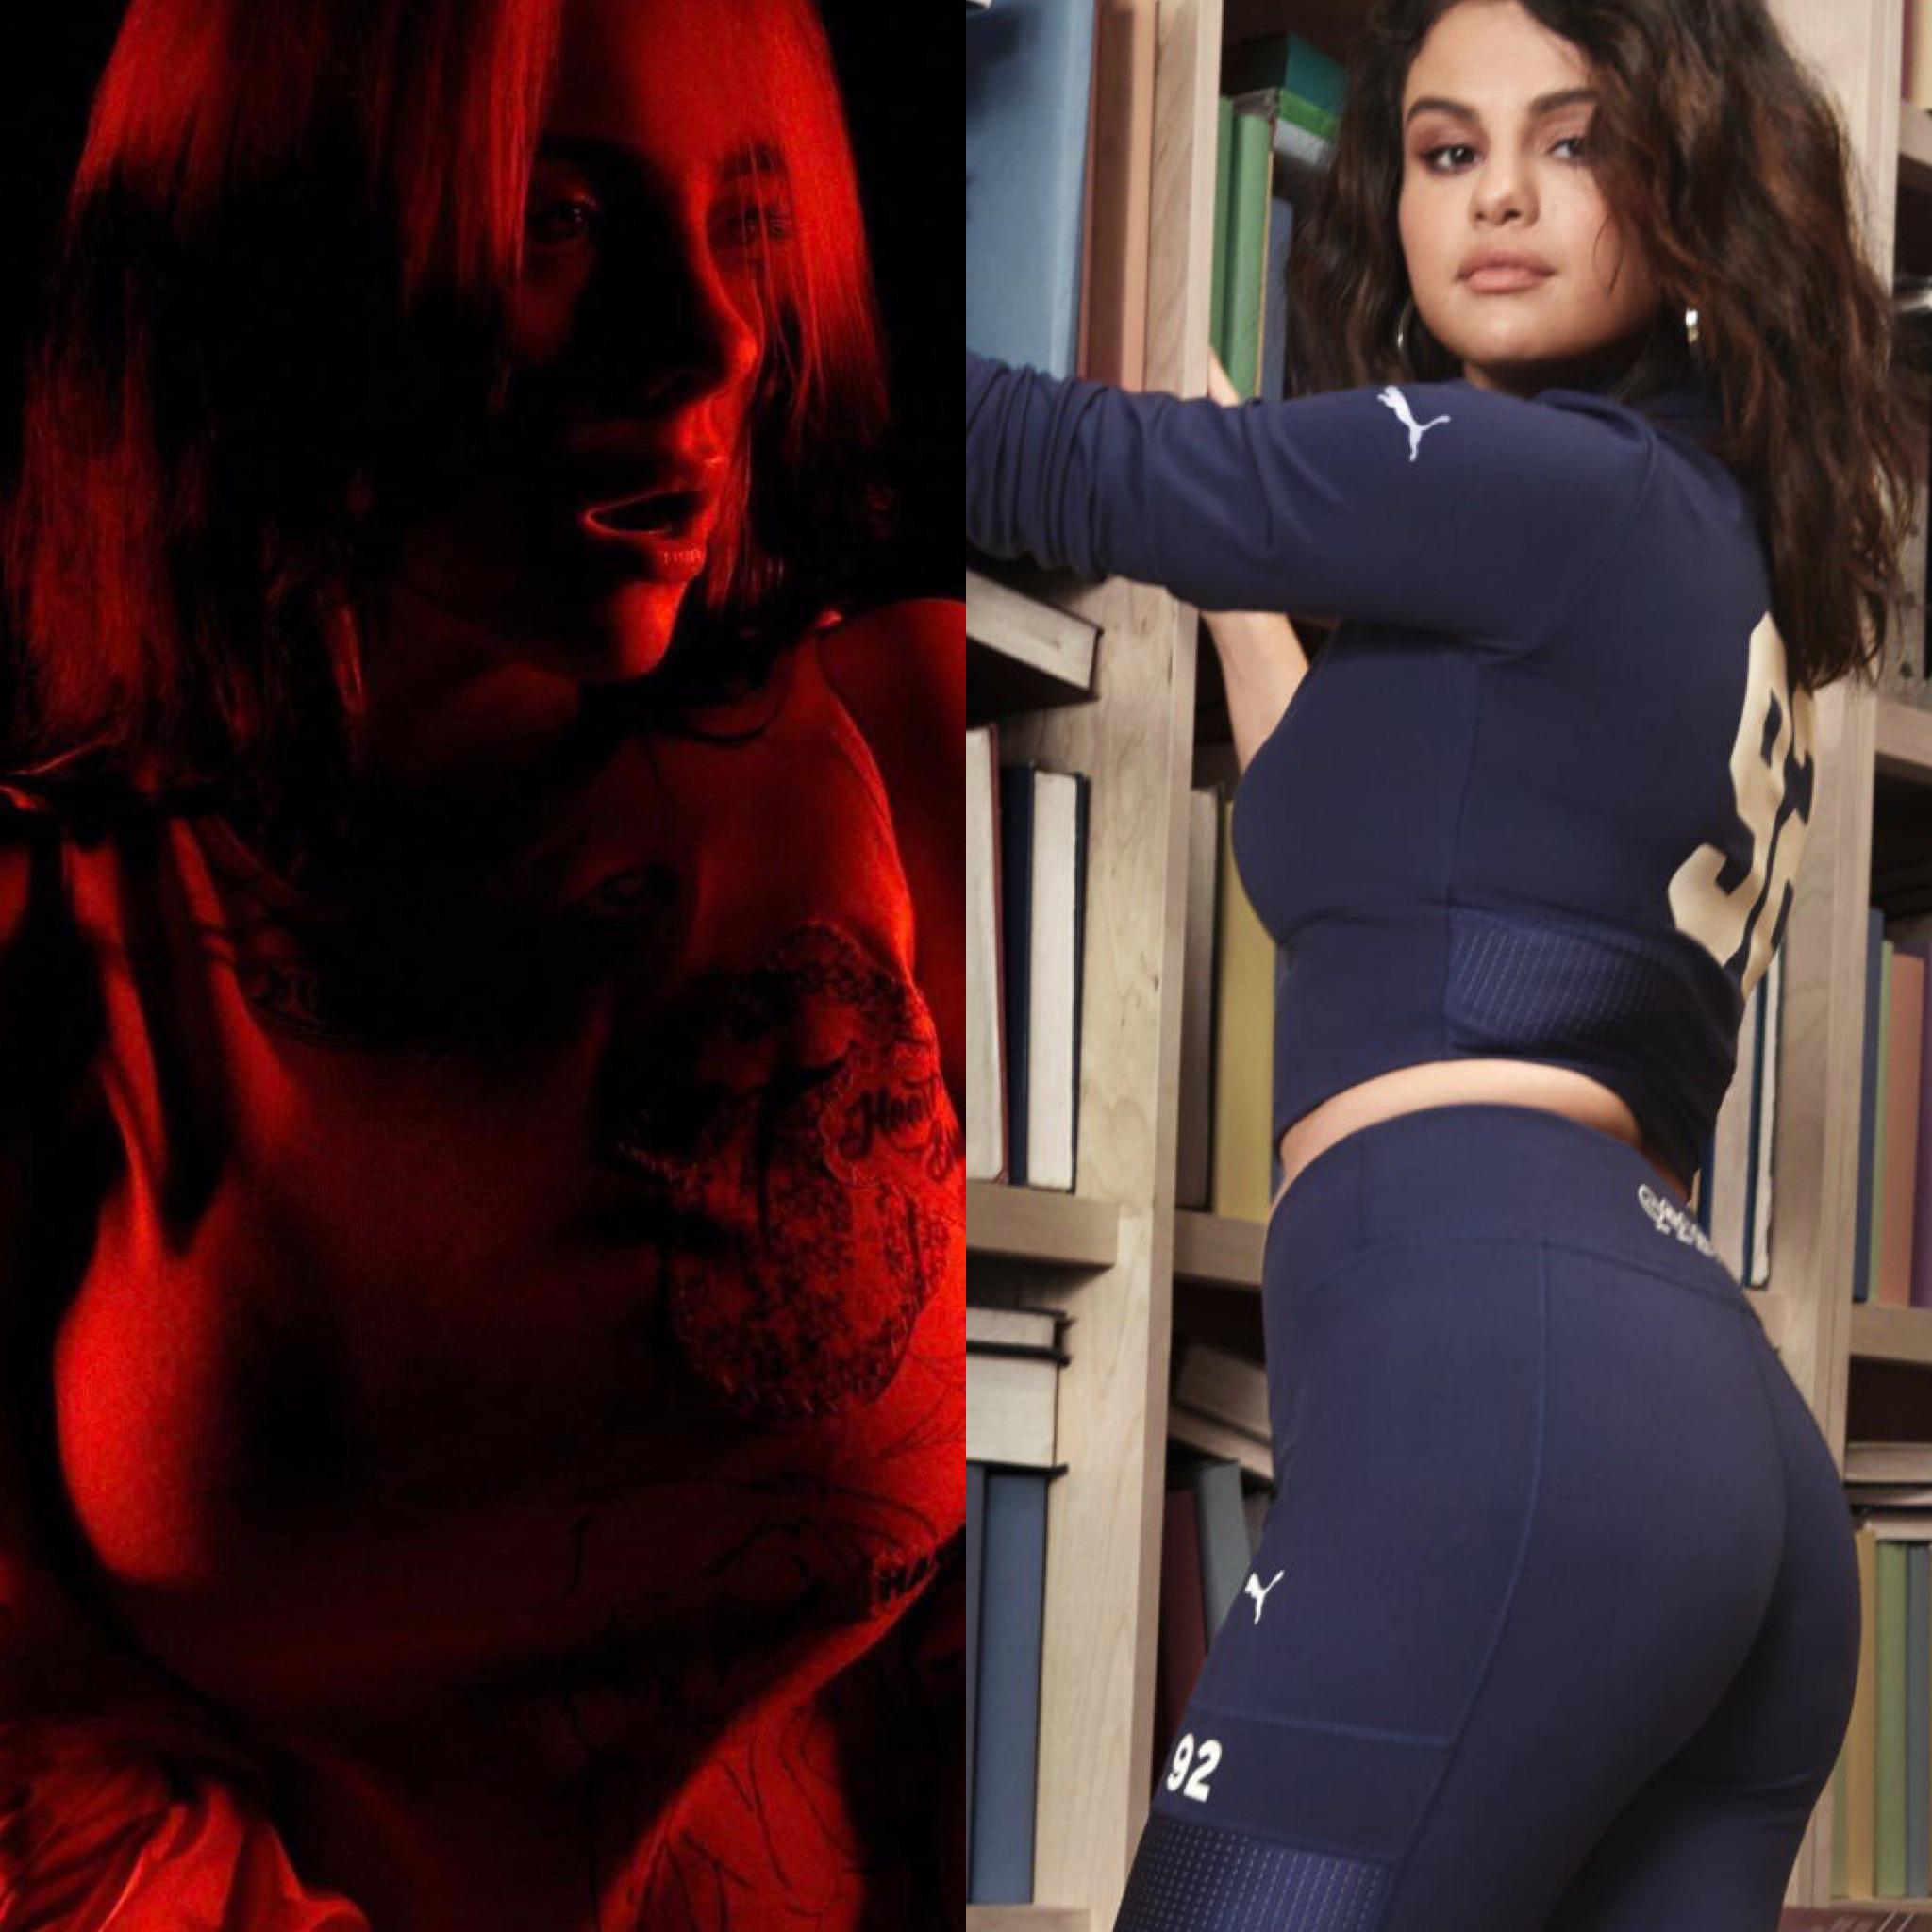 Whos your fantasy Billie Eilish or Selena Gomez